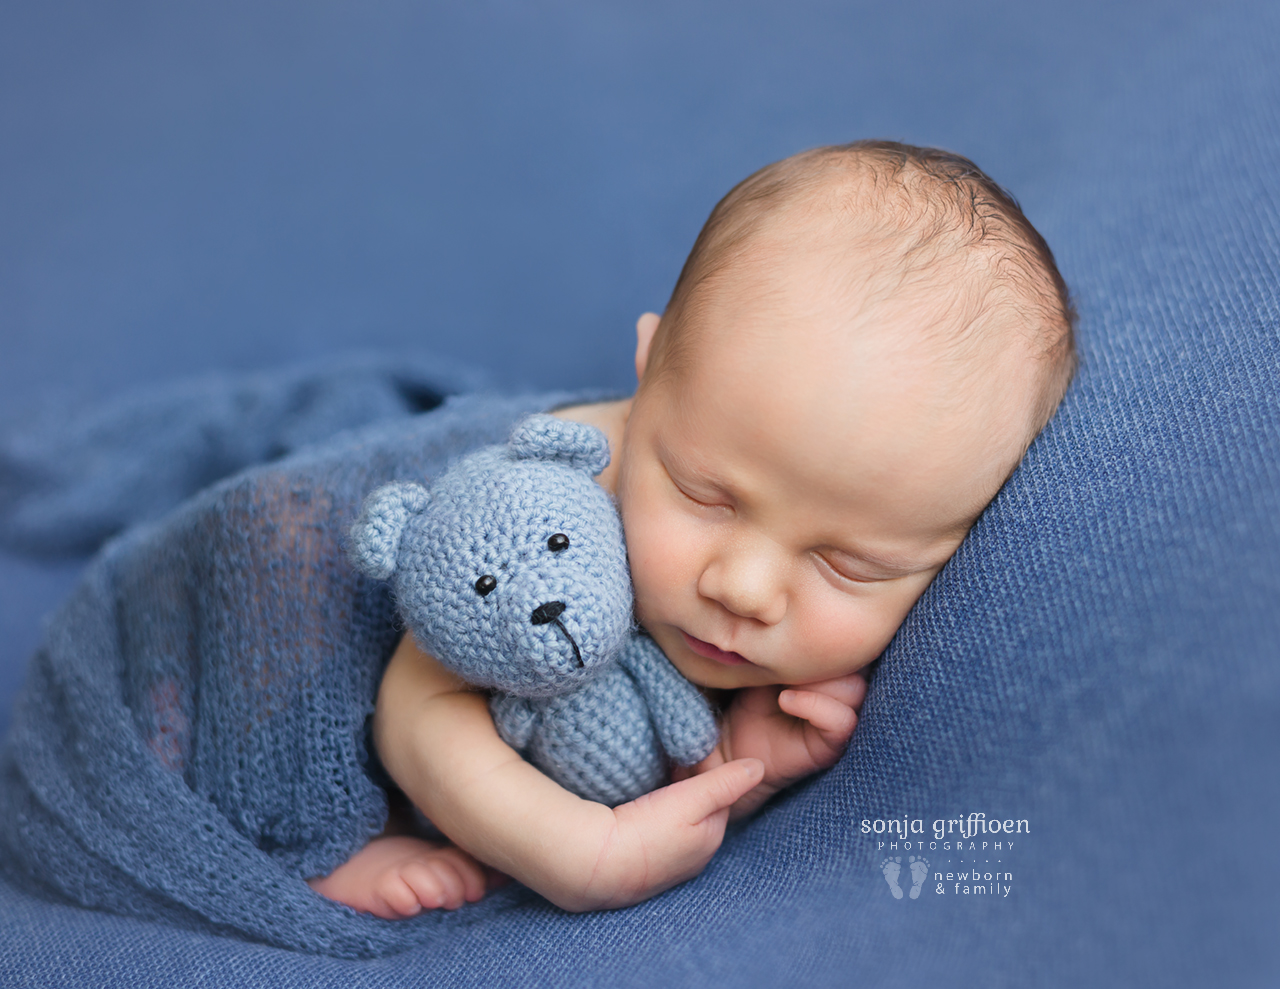 Huxley-Newborn-Brisbane-Newborn-Photographer-Sonja-Griffioen-19.jpg